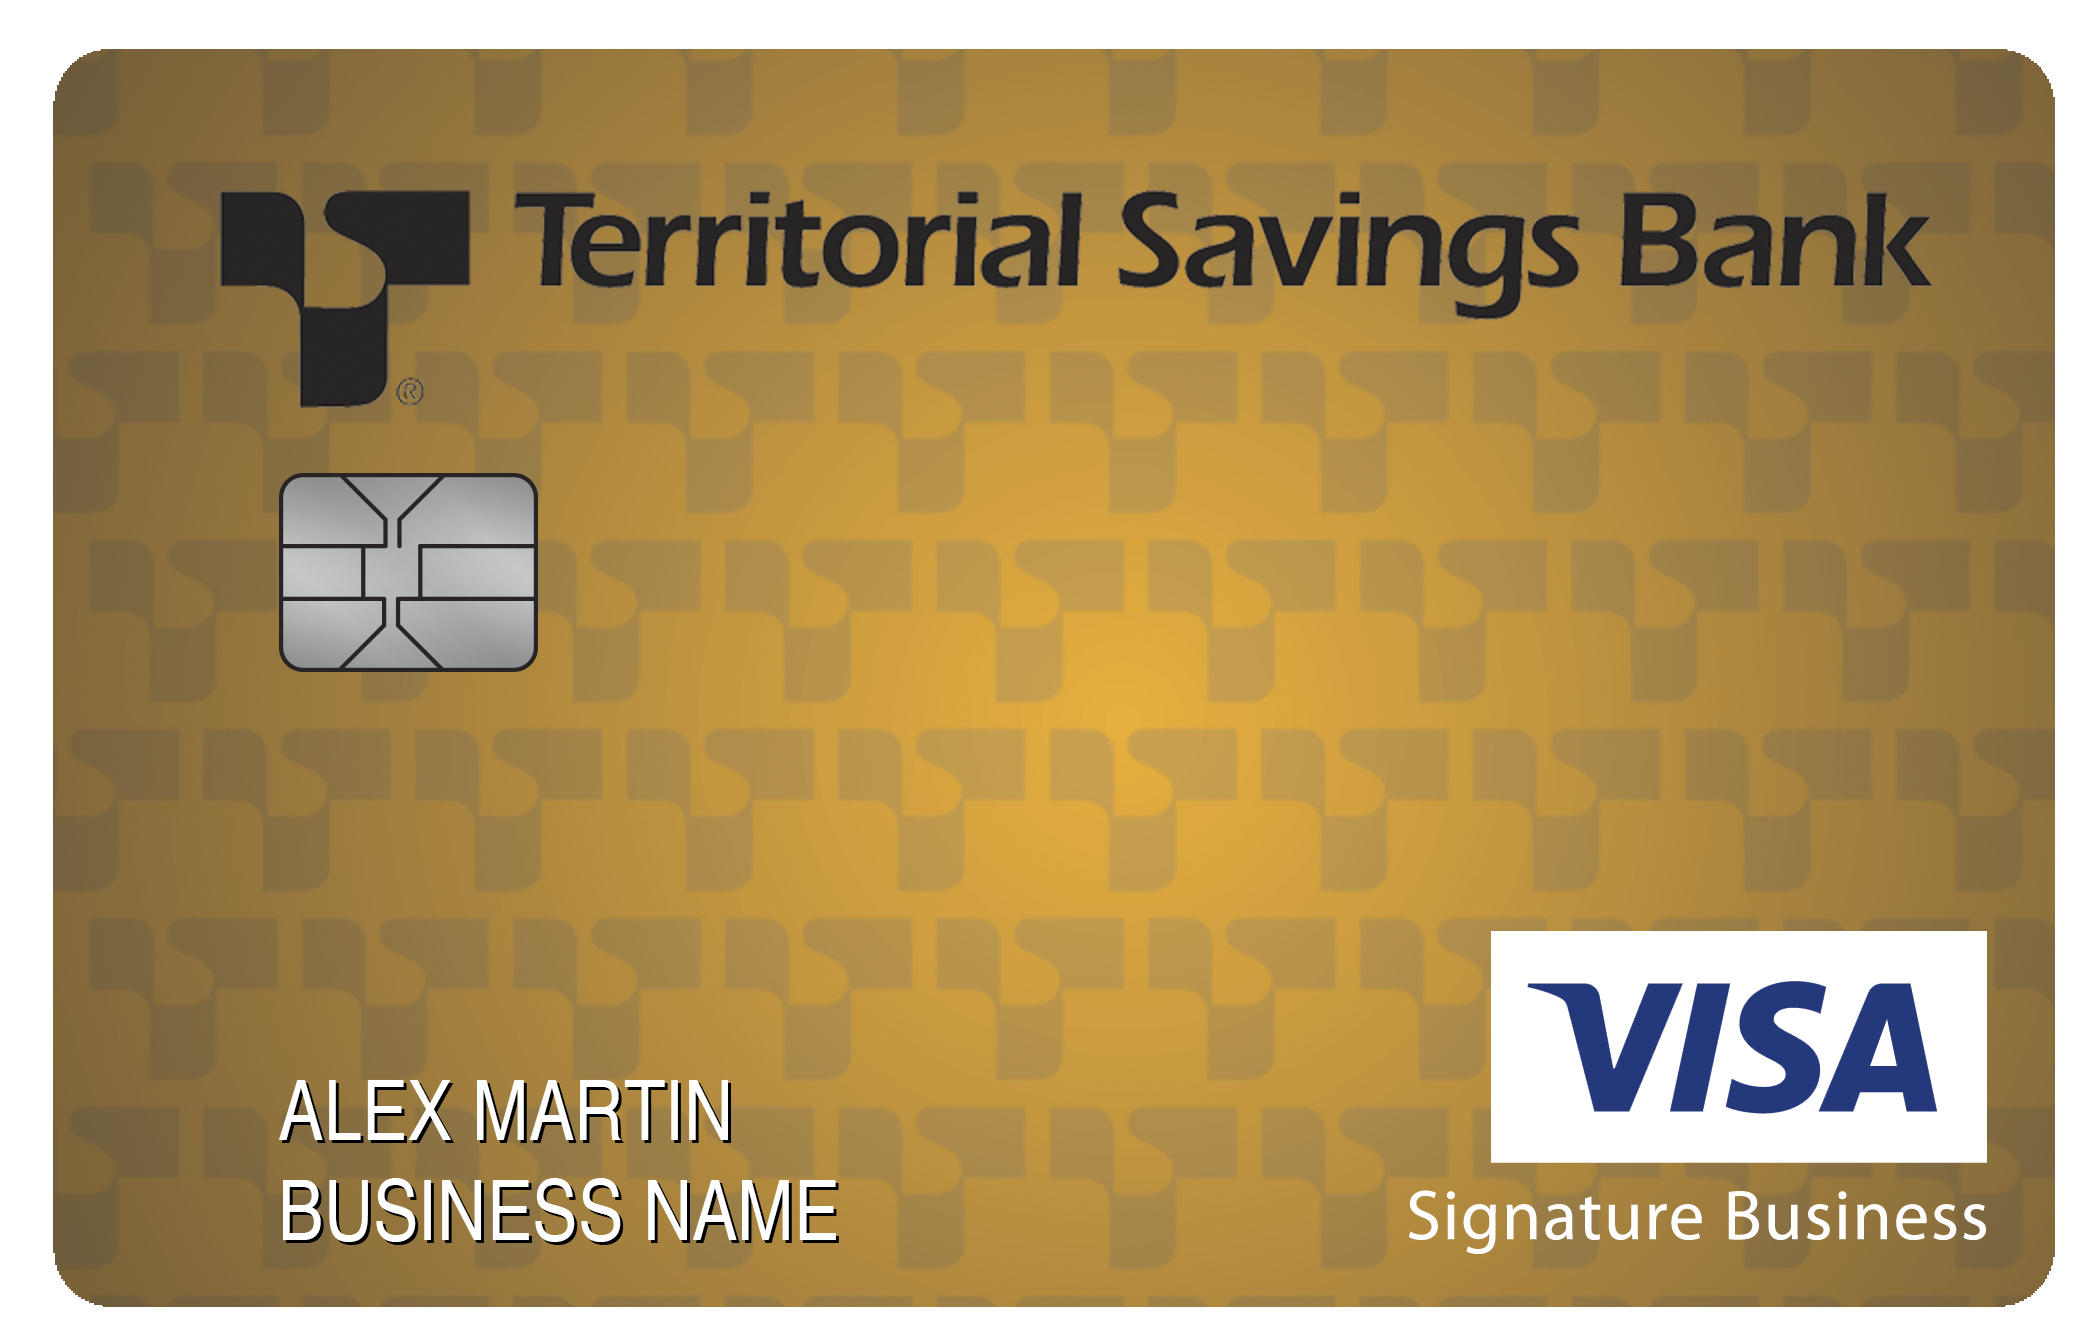 Territorial Savings Bank Smart Business Rewards Card